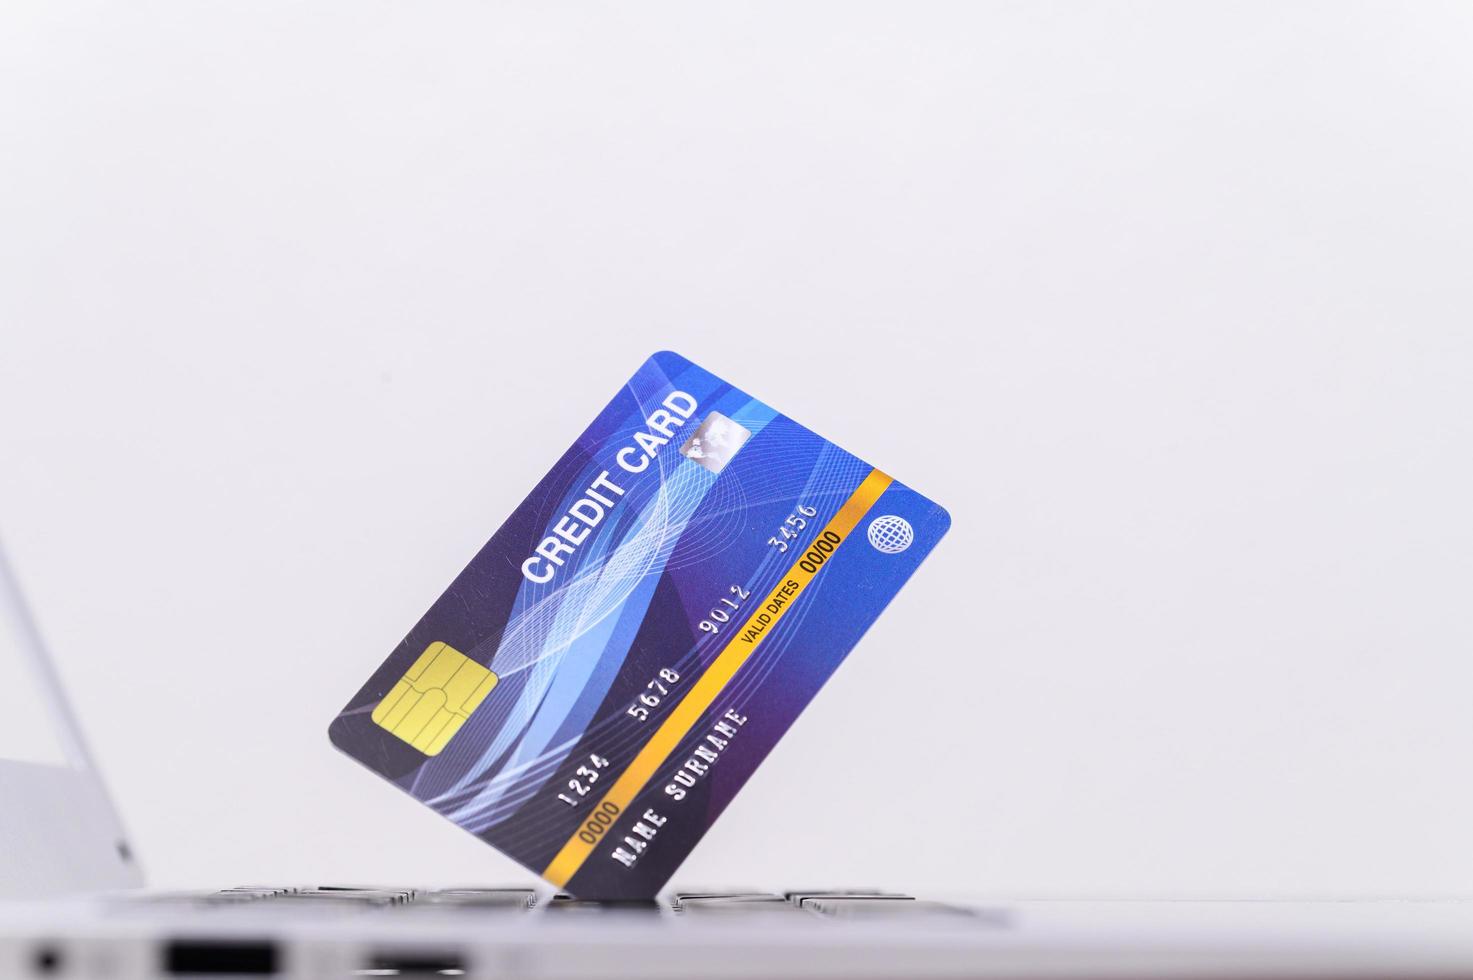 blå kreditkort foto